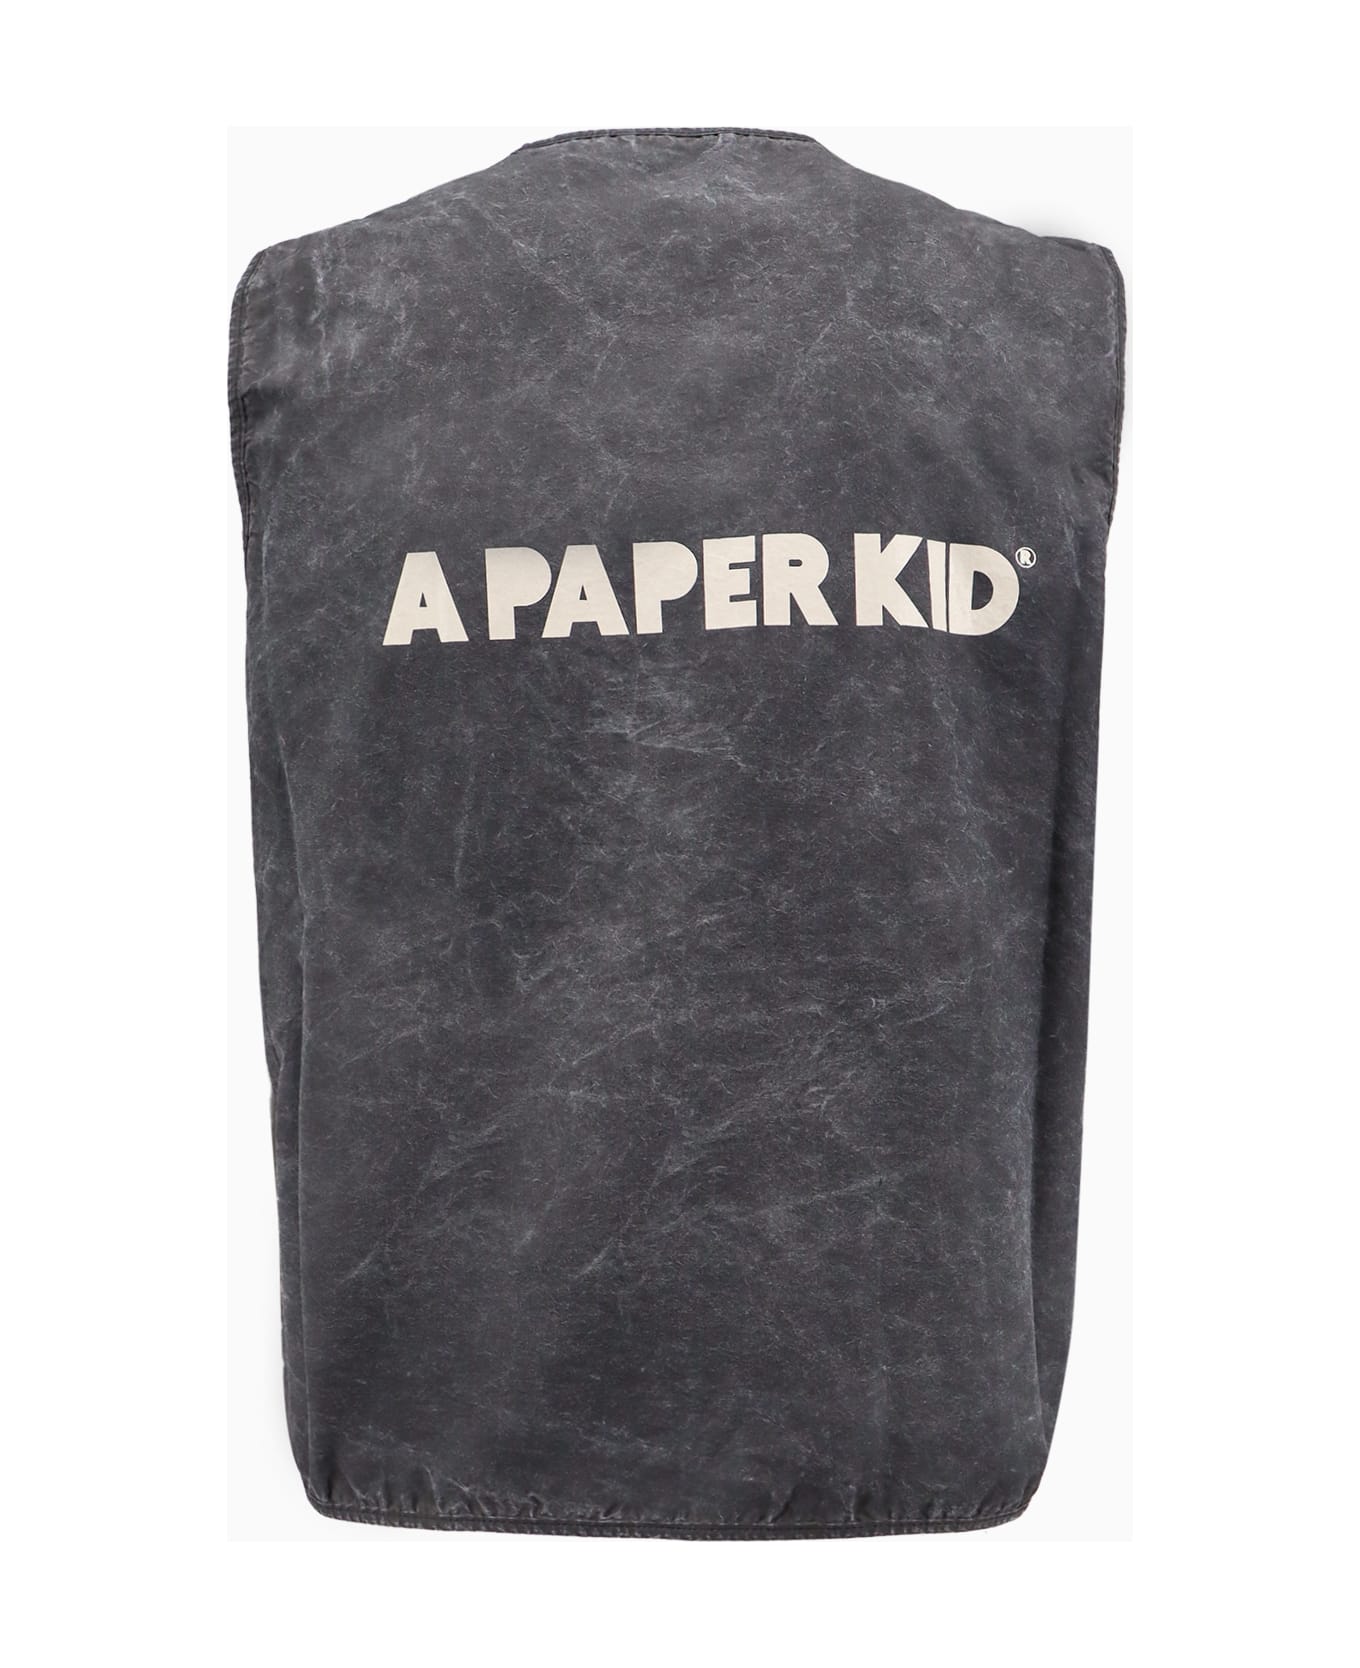 A Paper Kid Jacket - Black